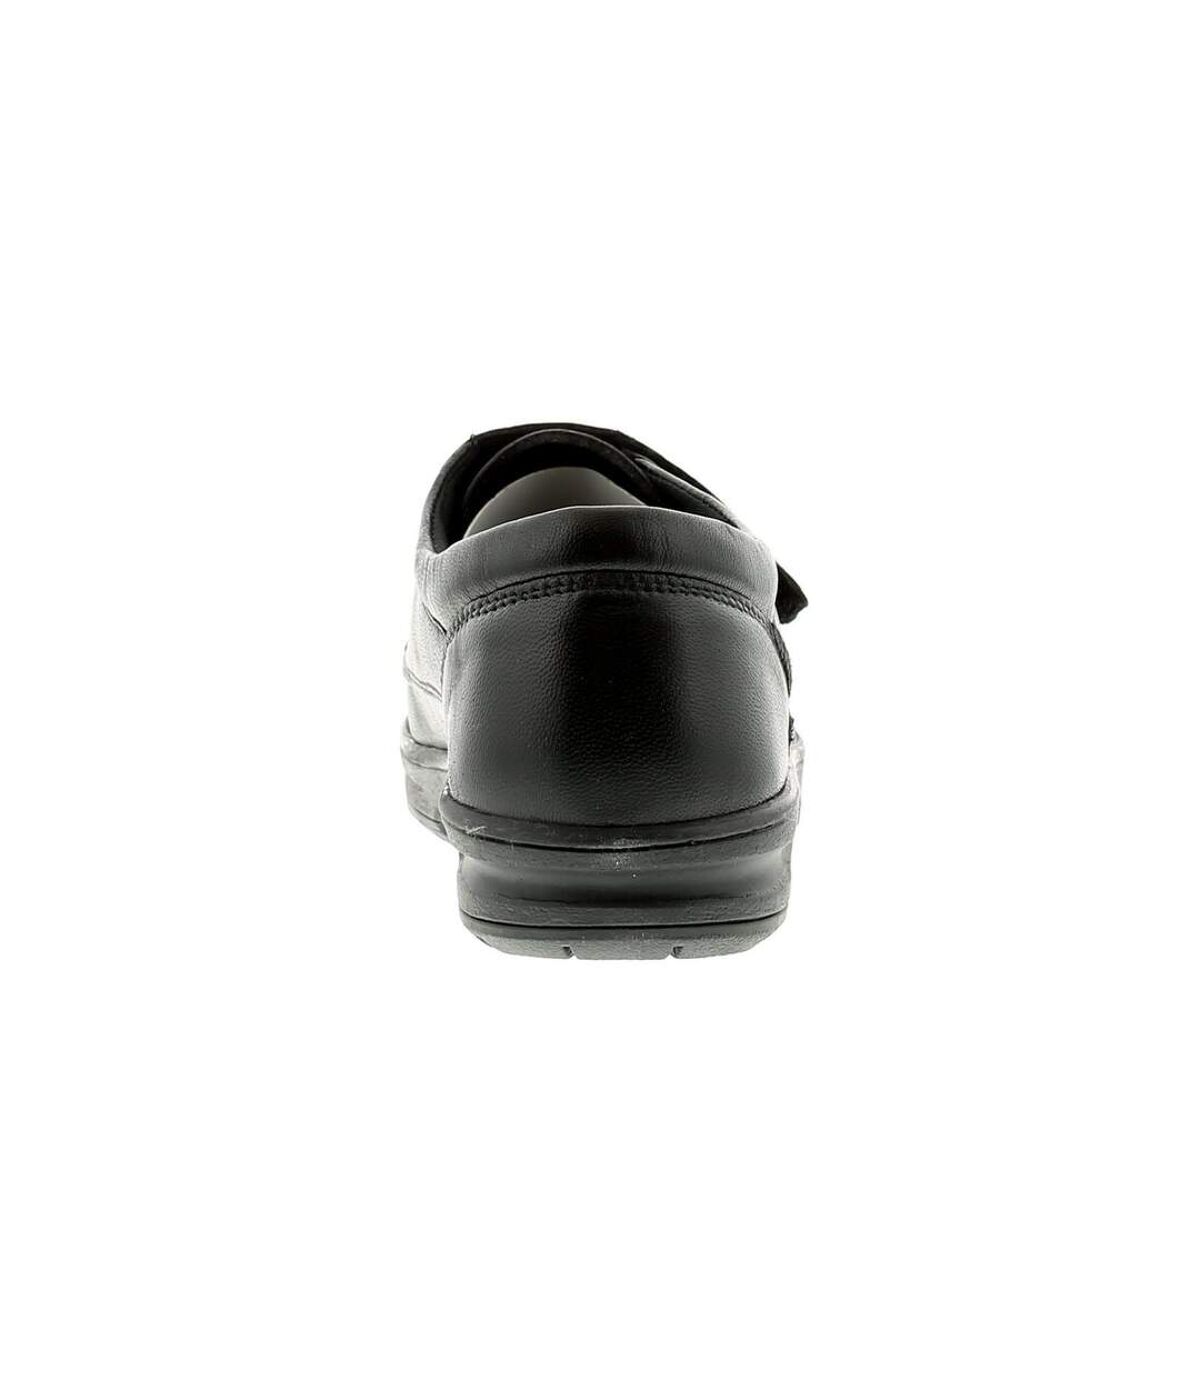 Scimitar - Chaussures en cuir - Hommes (Noir) - UTDF1064